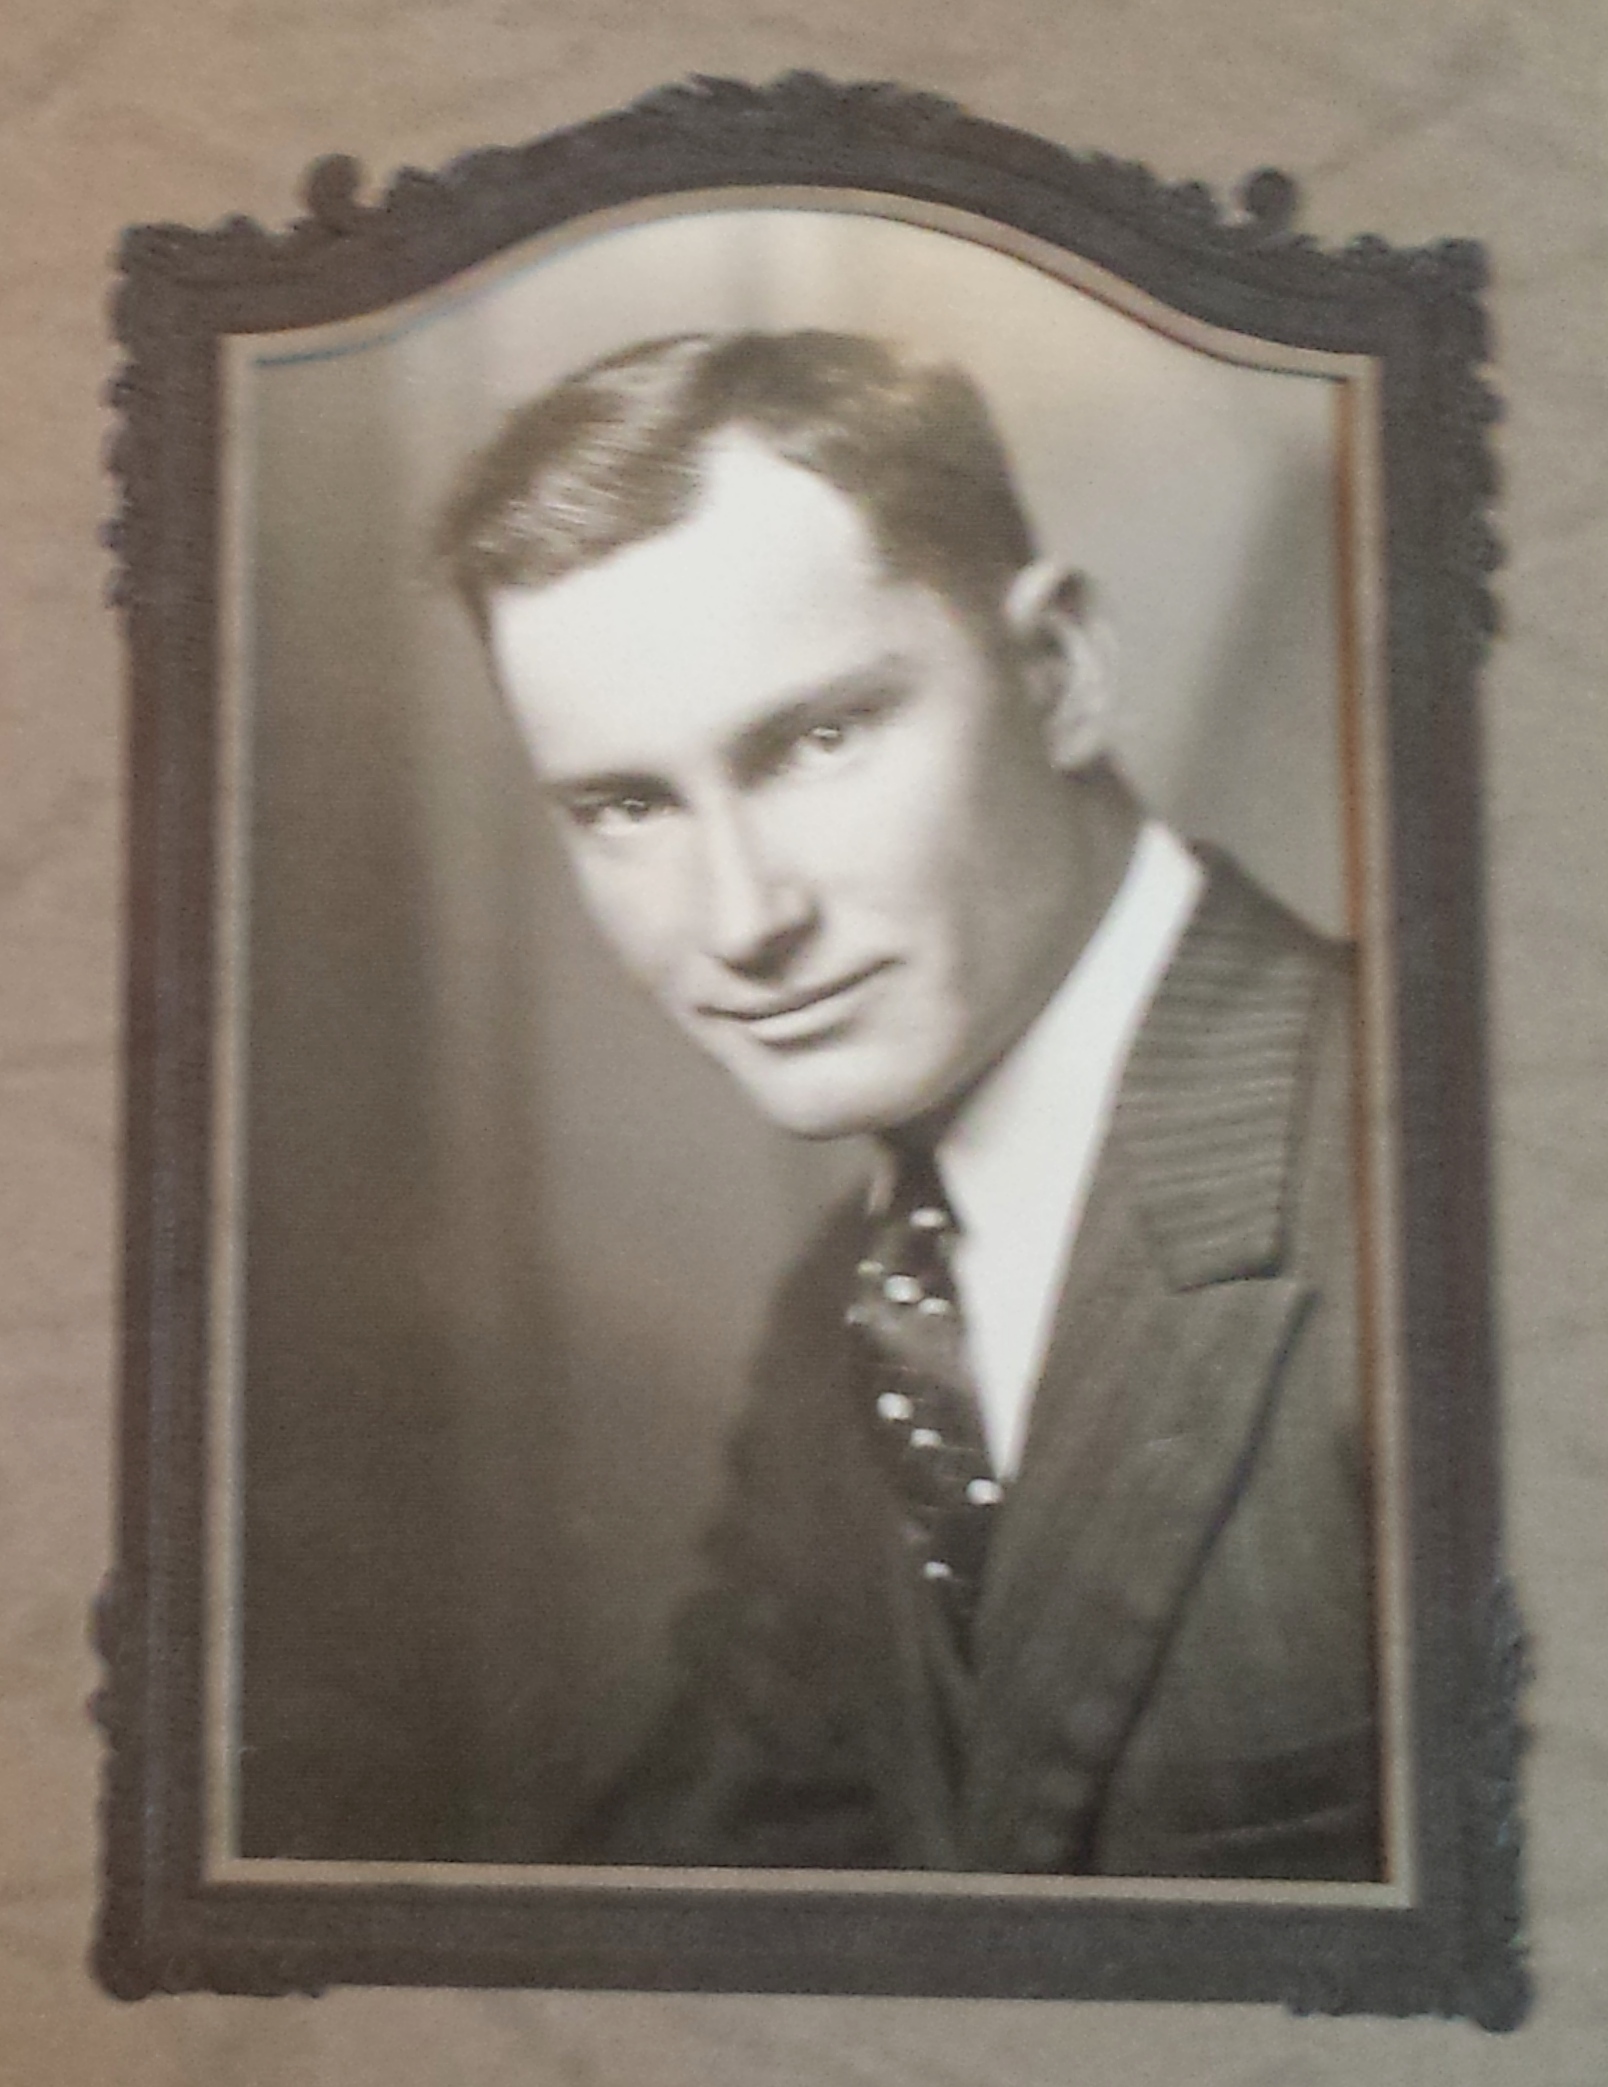 My grandfather, Laverne Ernst Claudson